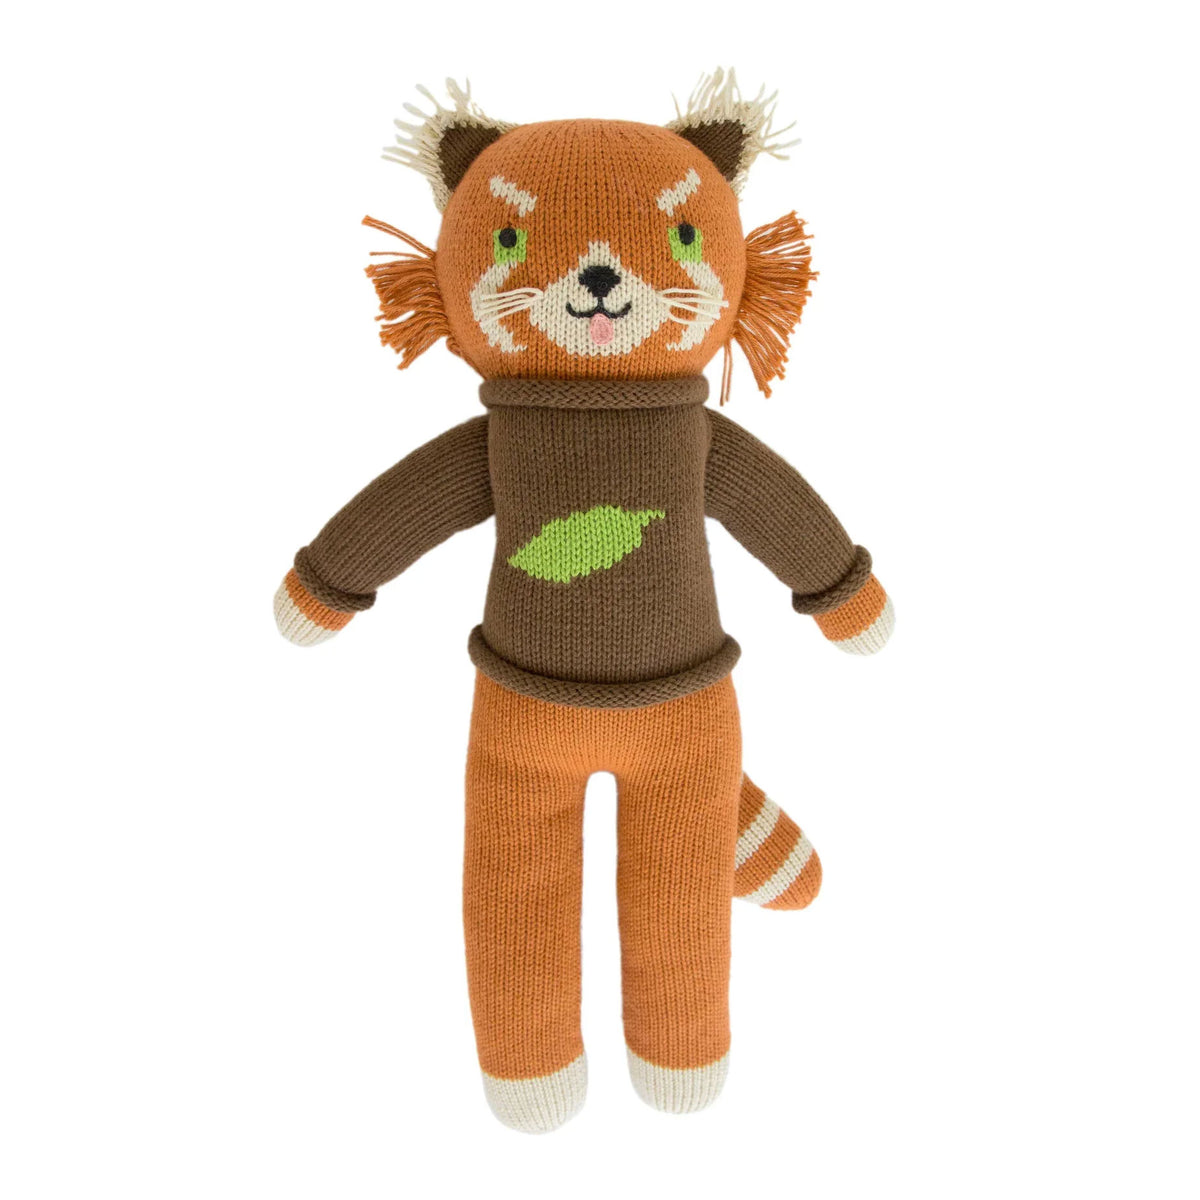 Blabla Knit Doll, Toulouse the Panda - Mini Size